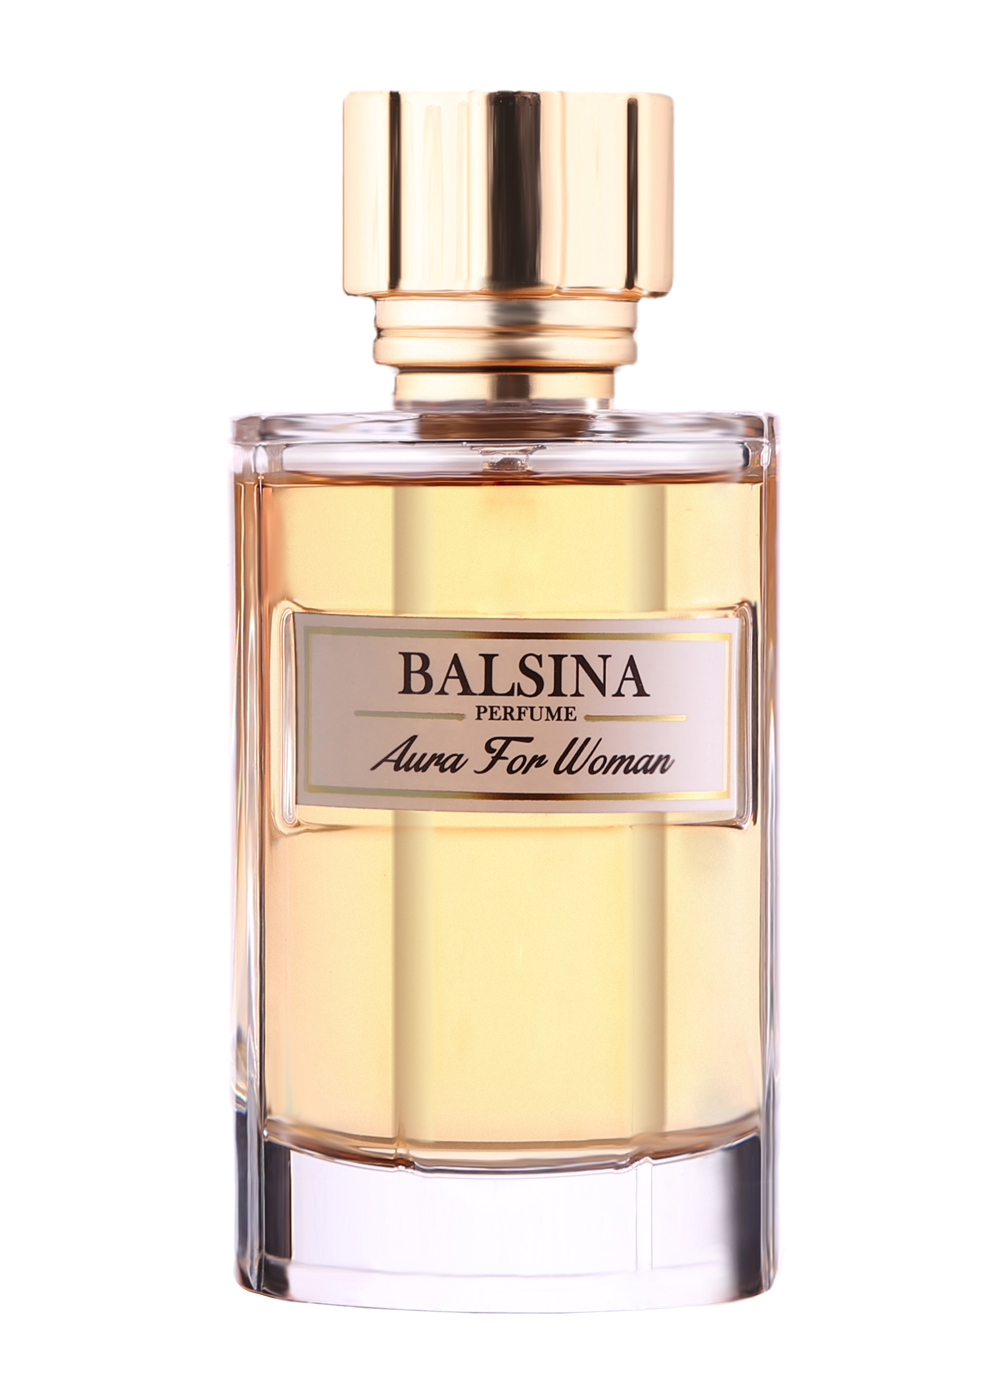 Aura Balsina perfume - a fragrance for women 2018